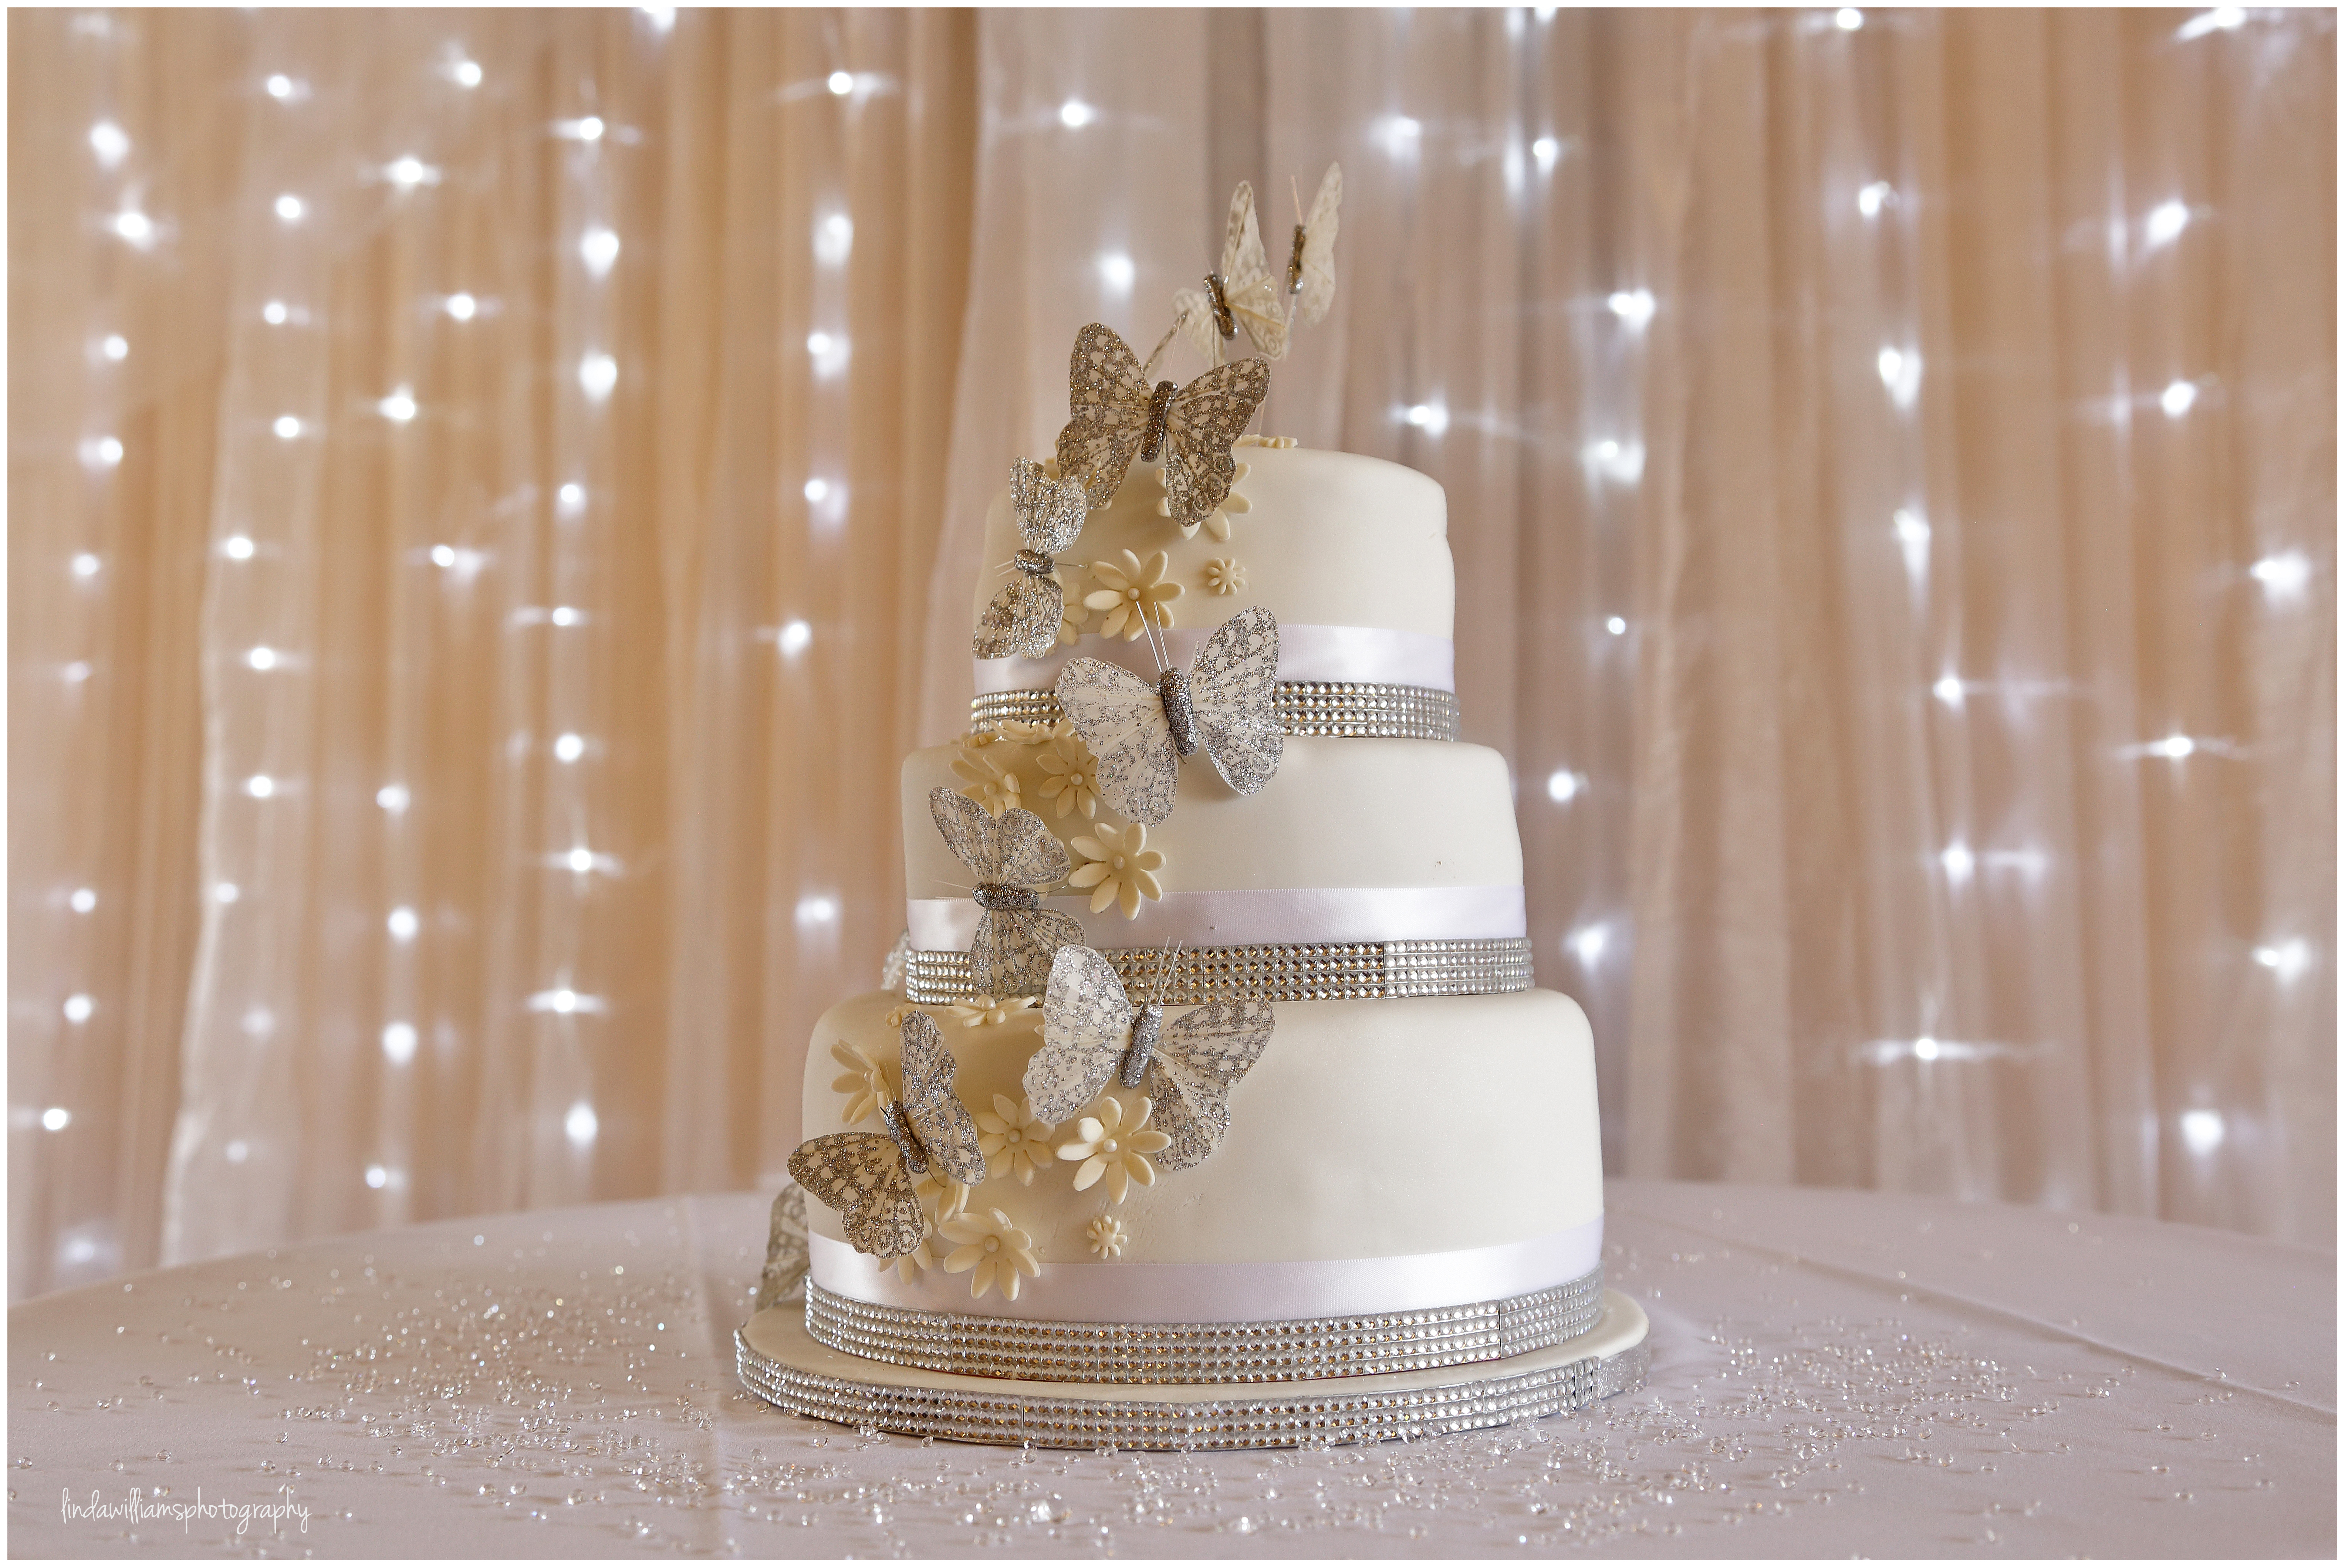 Wedding cake lit up by fairy lights